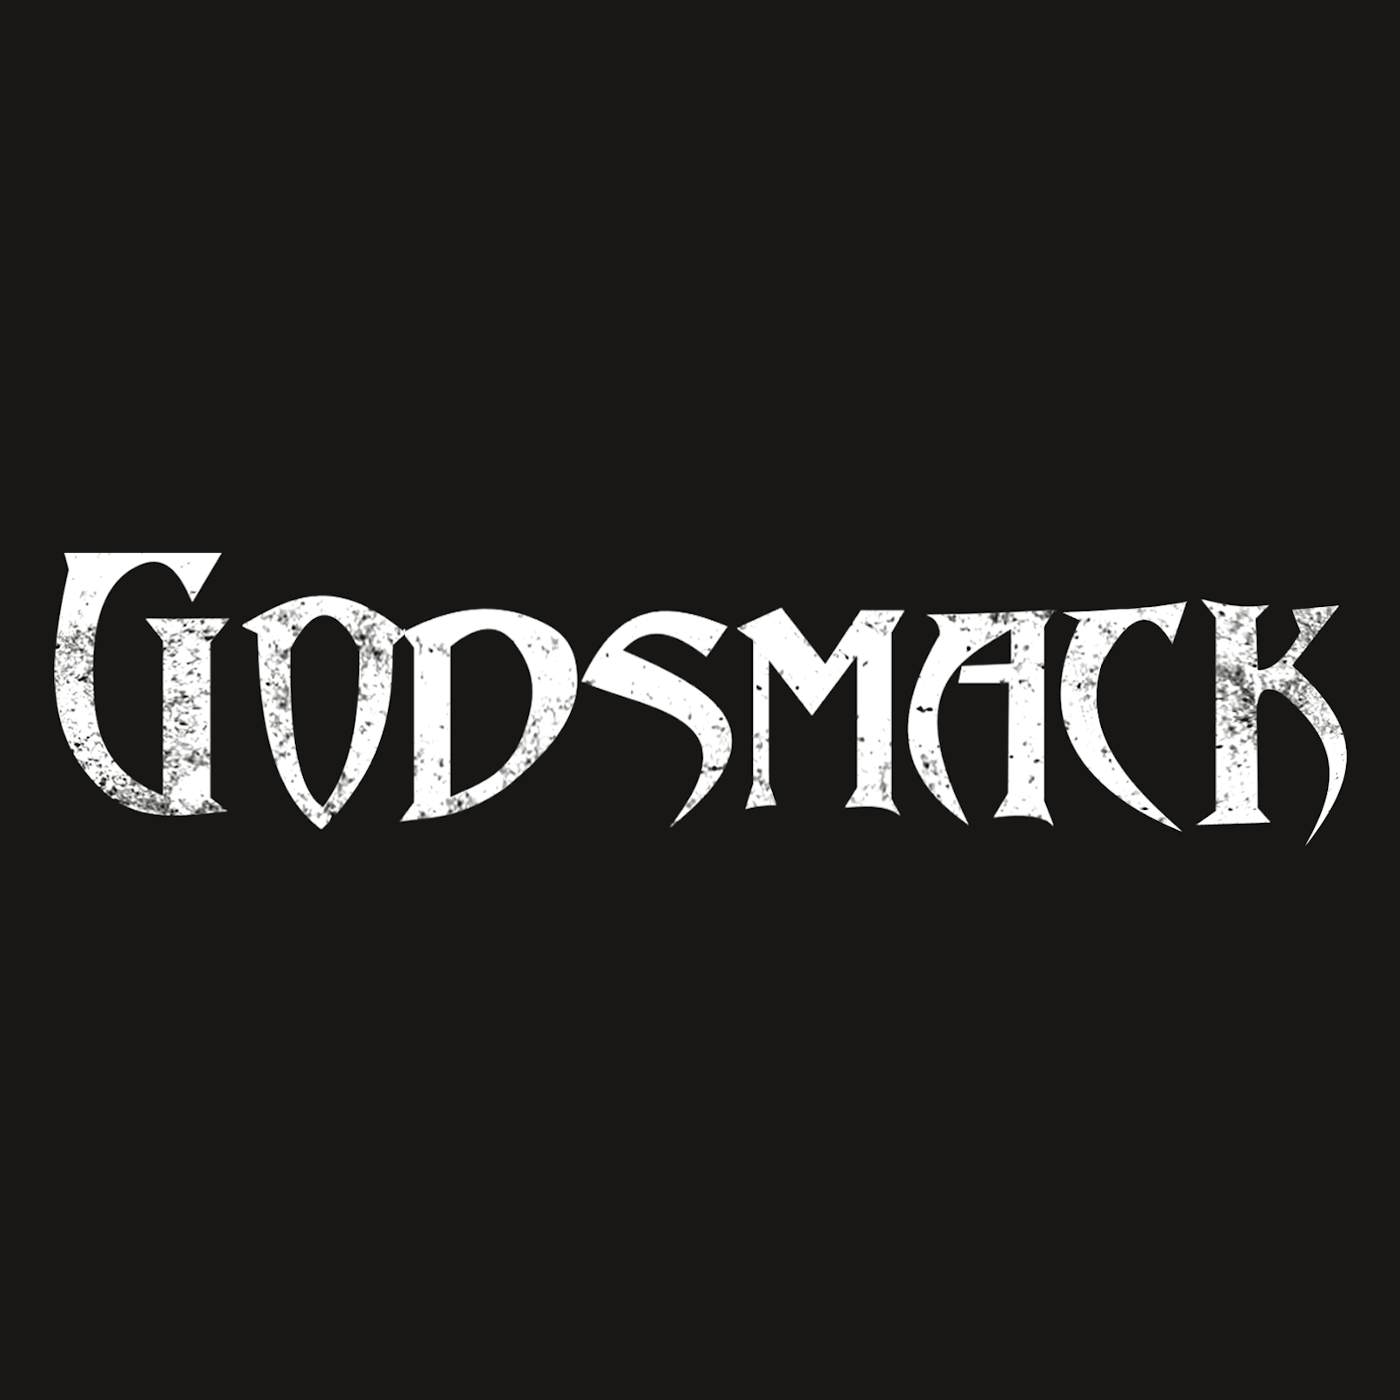 Godsmack T-Shirt | Official Logo Godsmack Shirt